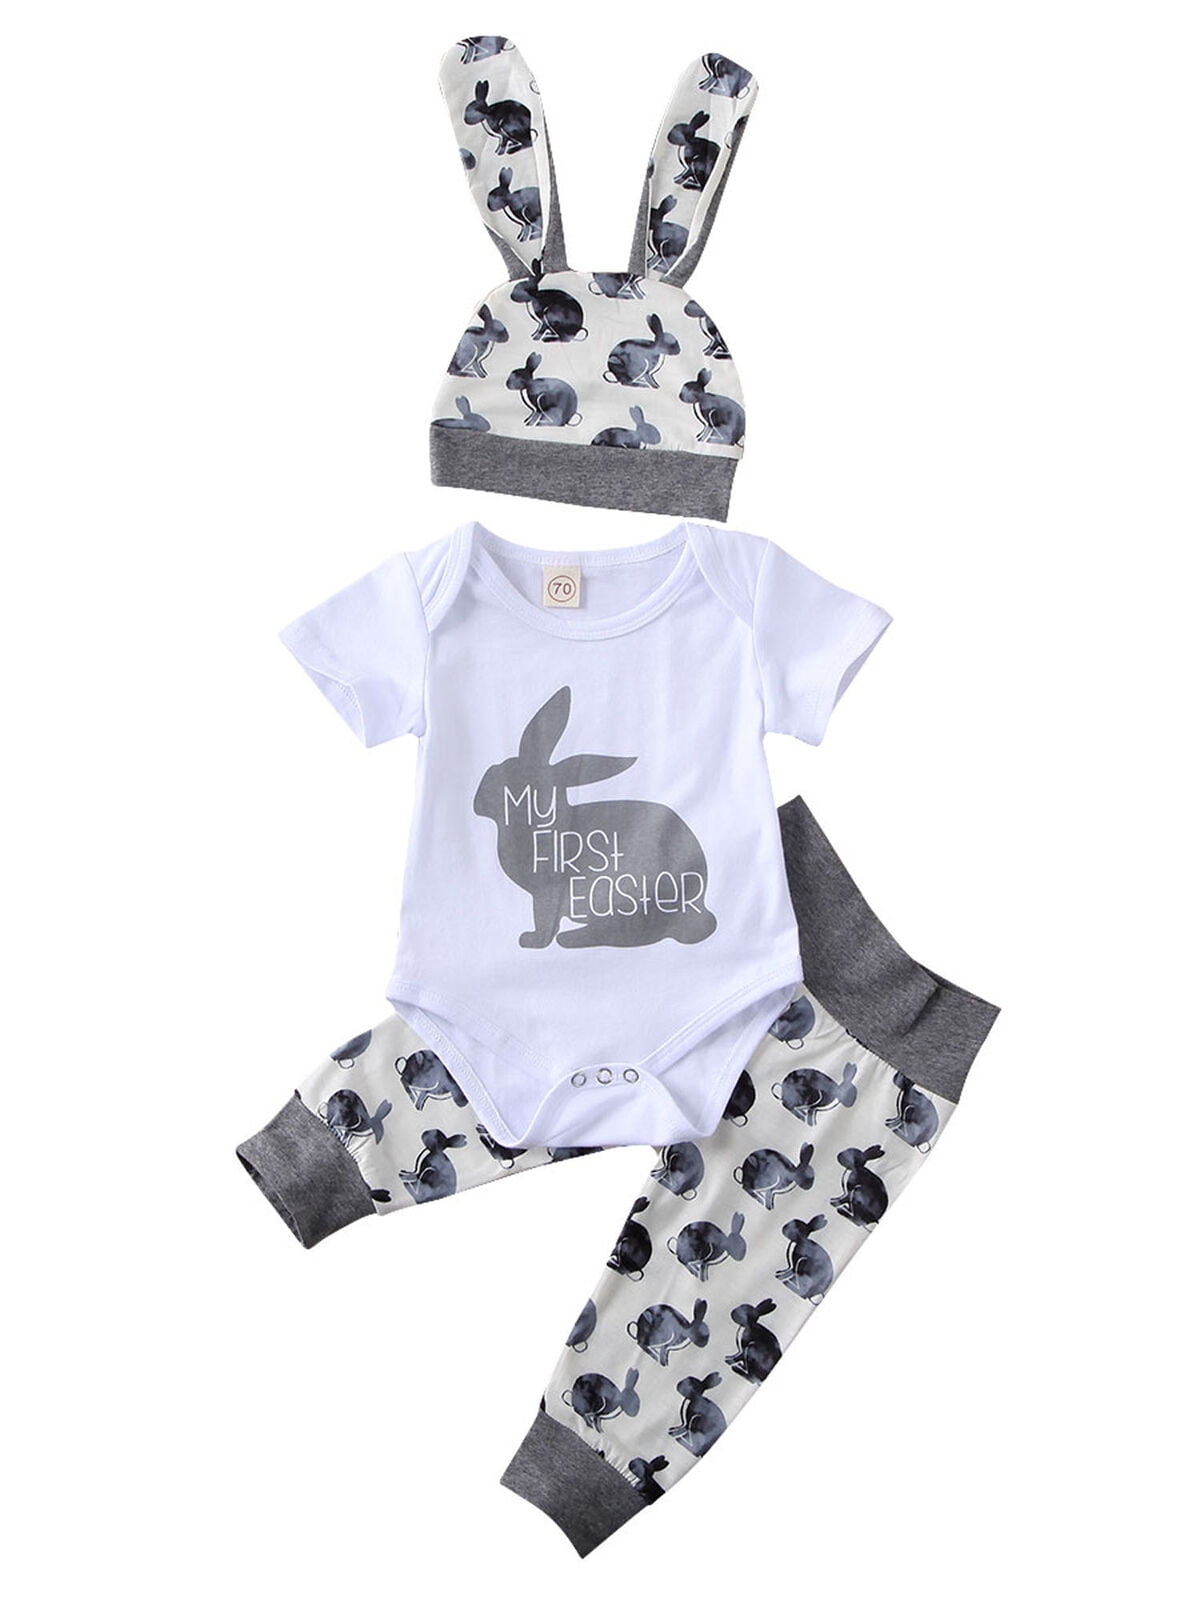 Cute Newborn Toddler Baby Girls Boys Summer Romper Short Sleeve Easter Onesie Pajama Jumpsuit Outfit 0-18 Months